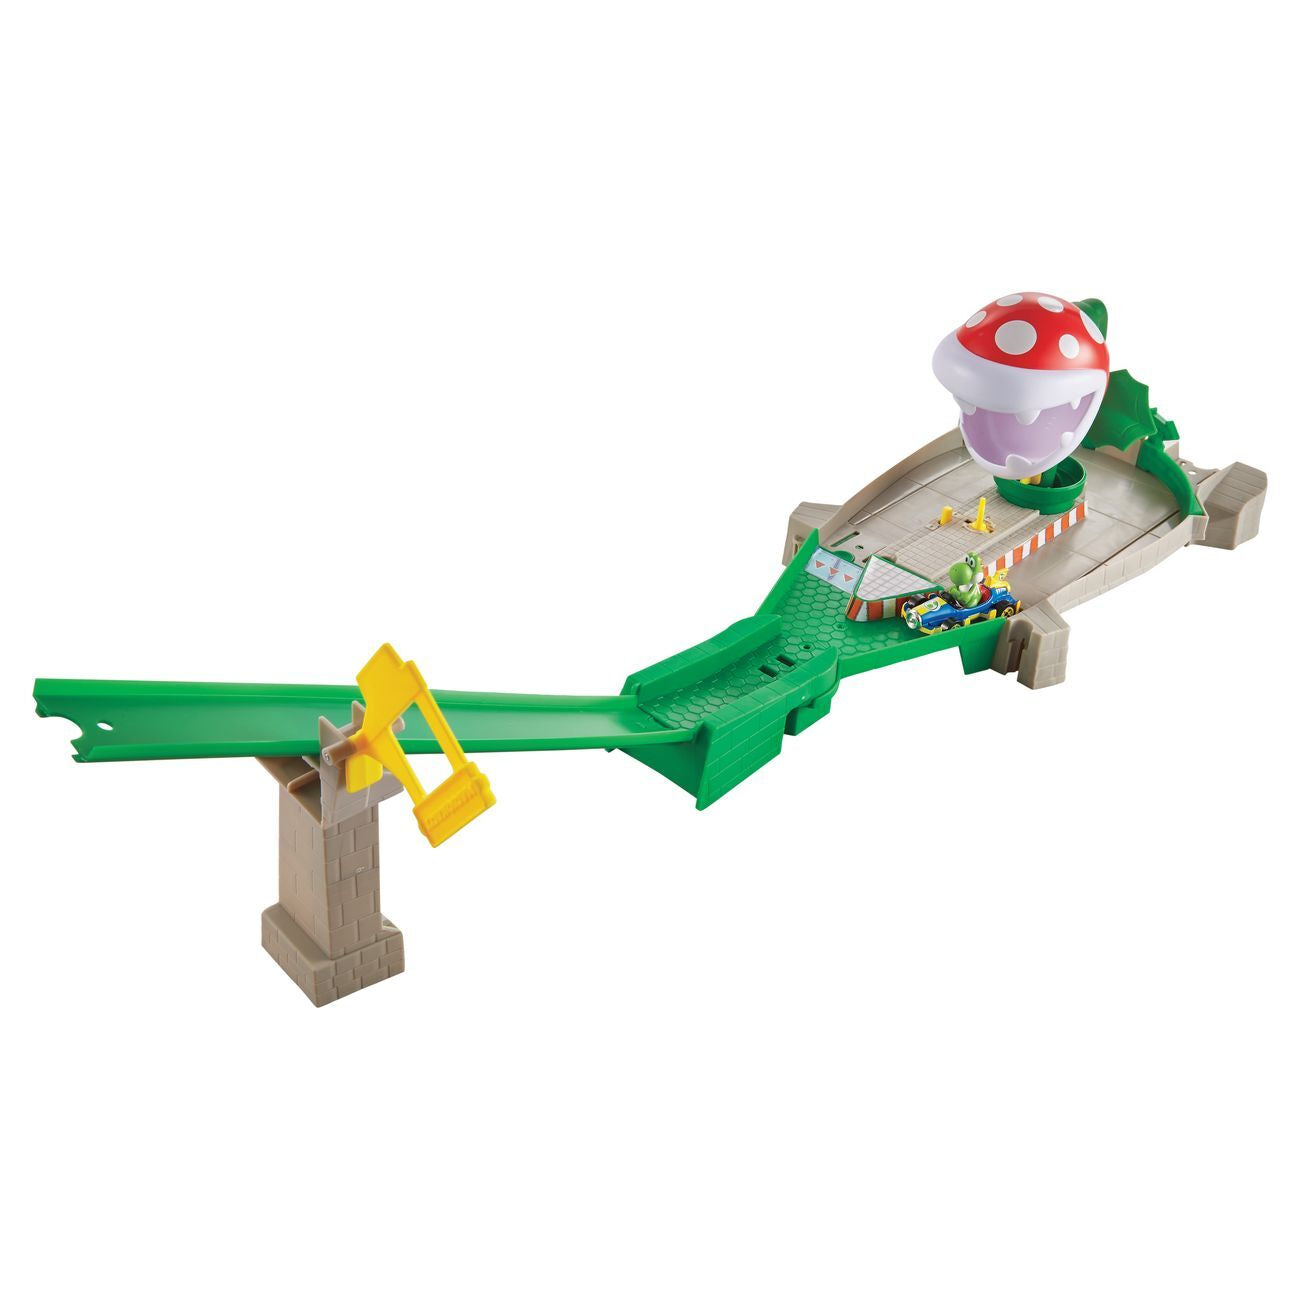 Hot Wheels Mariokart Track Set - Piranha Plant Slide